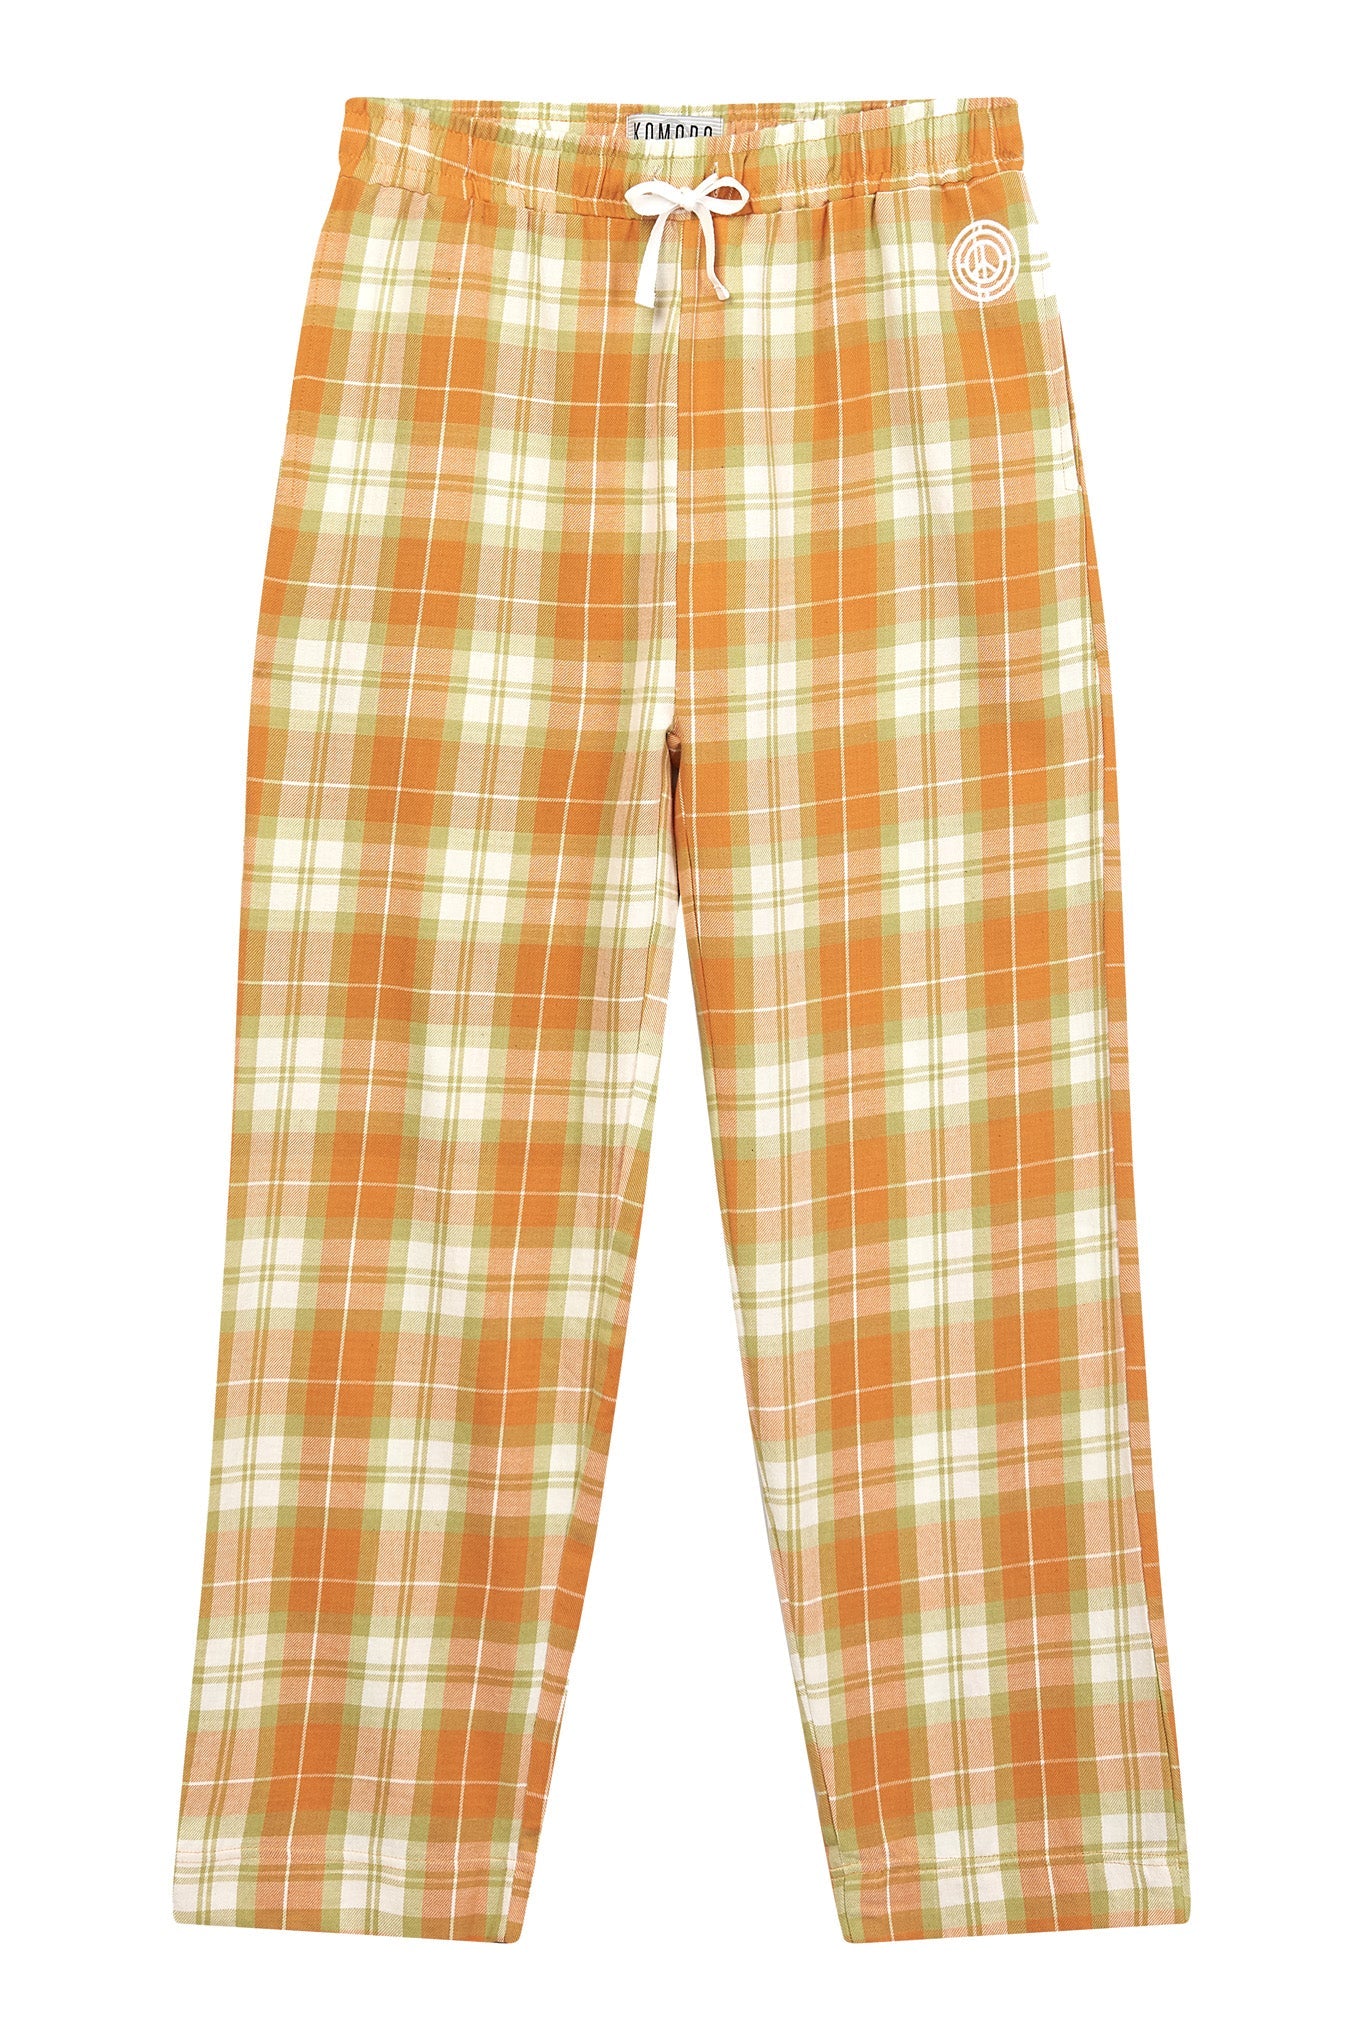 JIM JAM - Men's GOTS Organic Cotton Pyjama Set